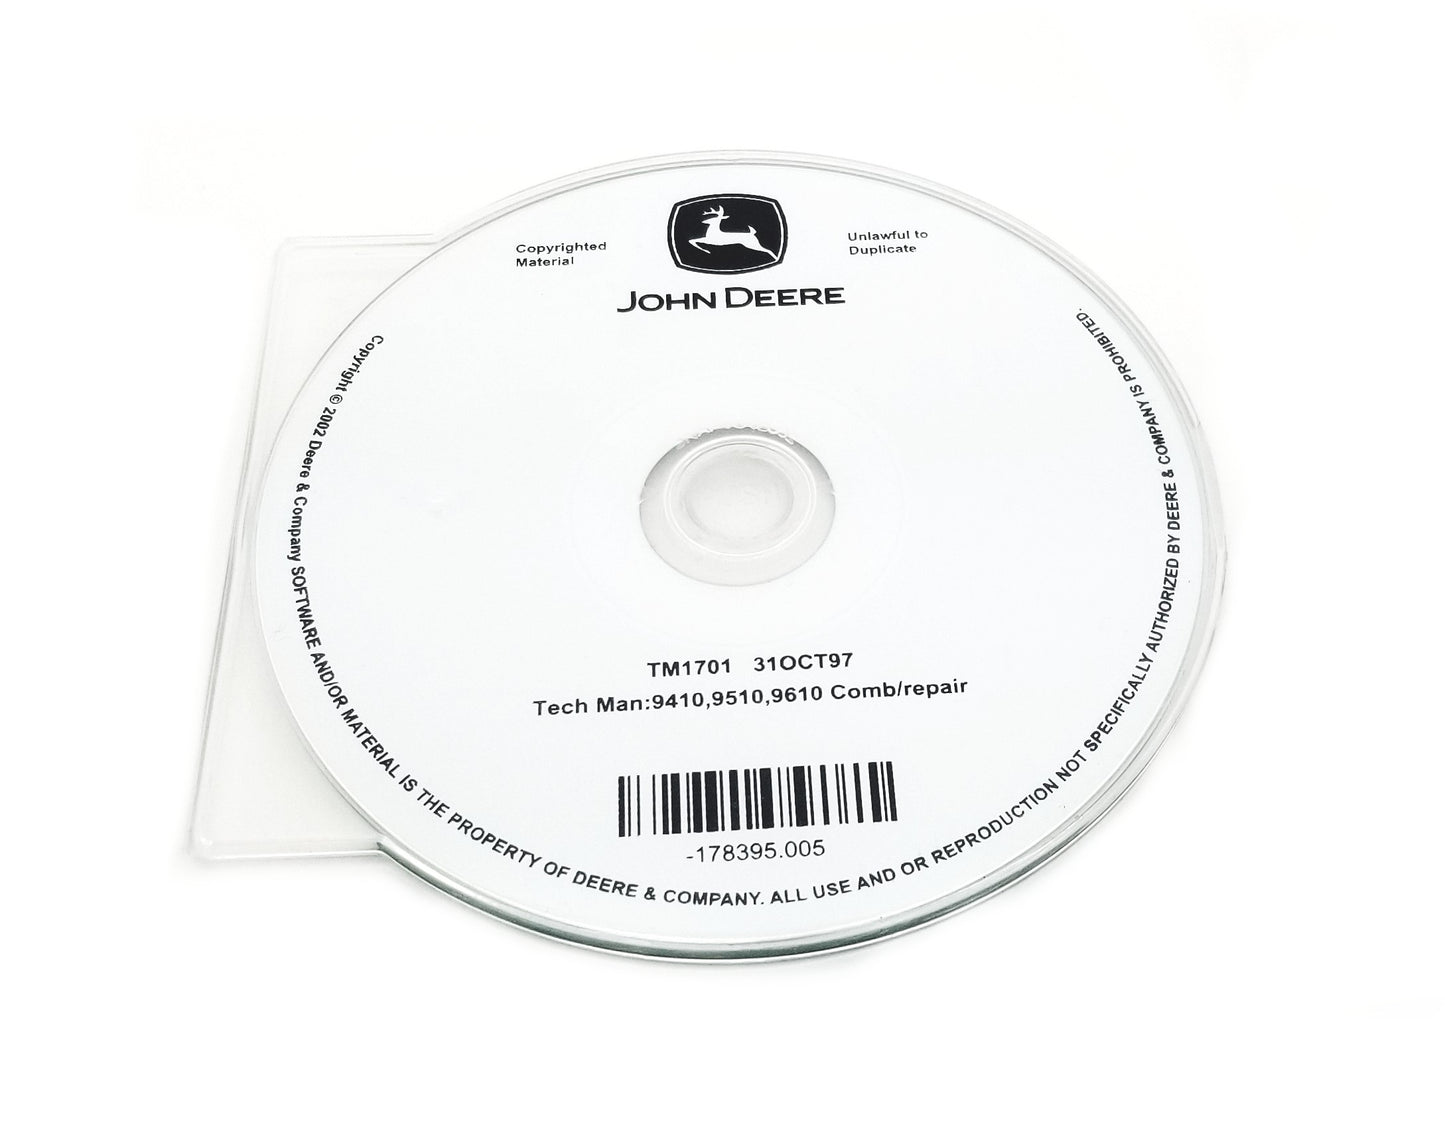 John Deere 9410/9510/9610 Combine Technical Manual CD - TM1701CD